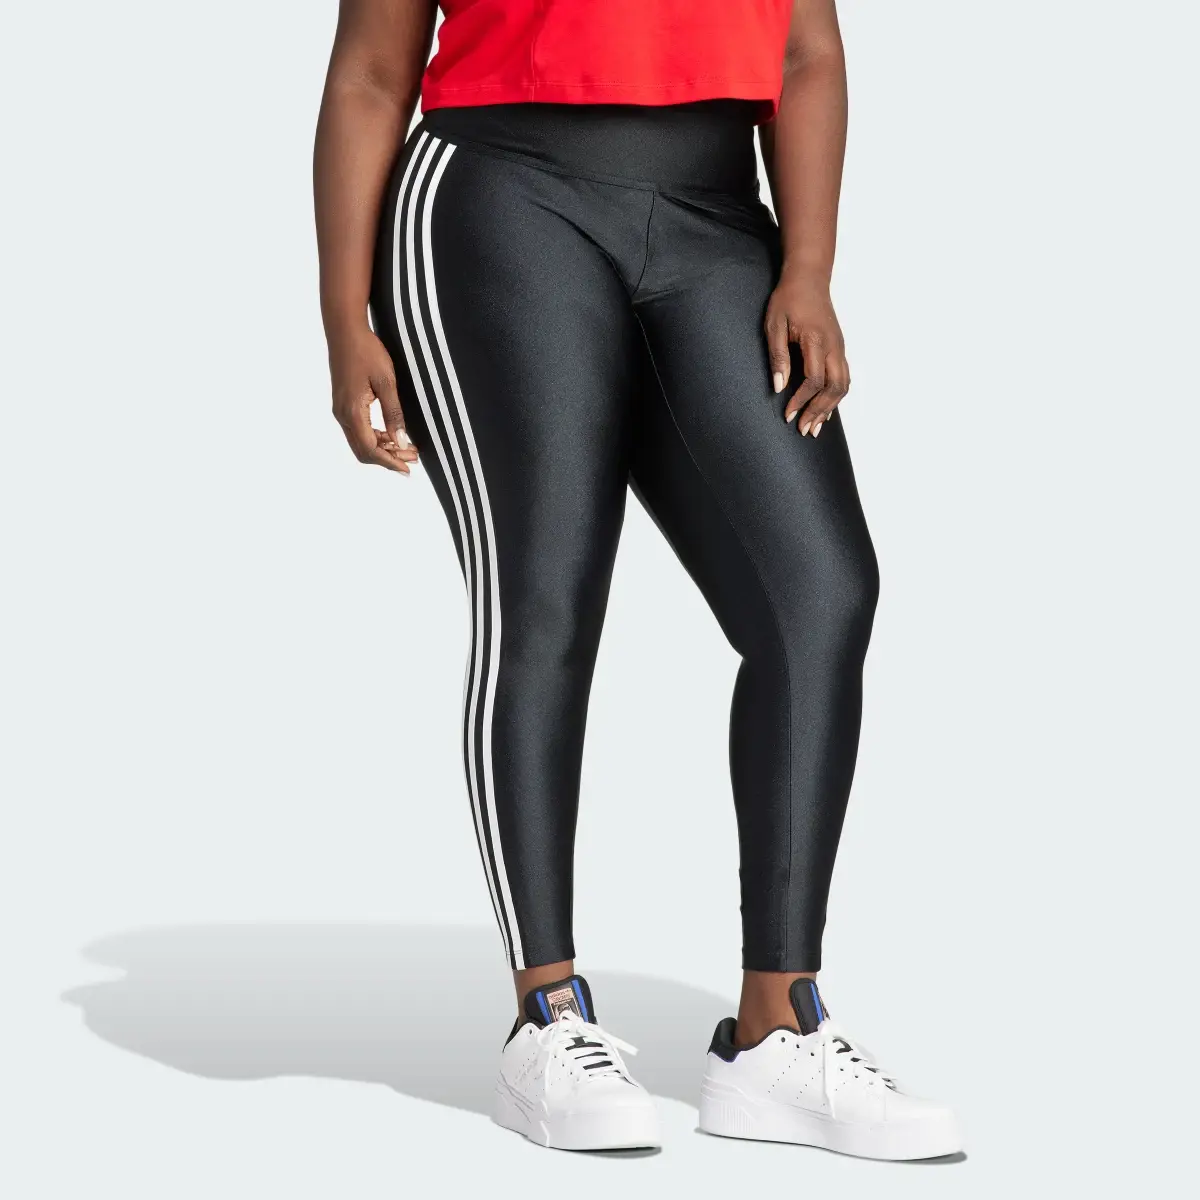 Adidas 3-Streifen Leggings – Große Größen. 3